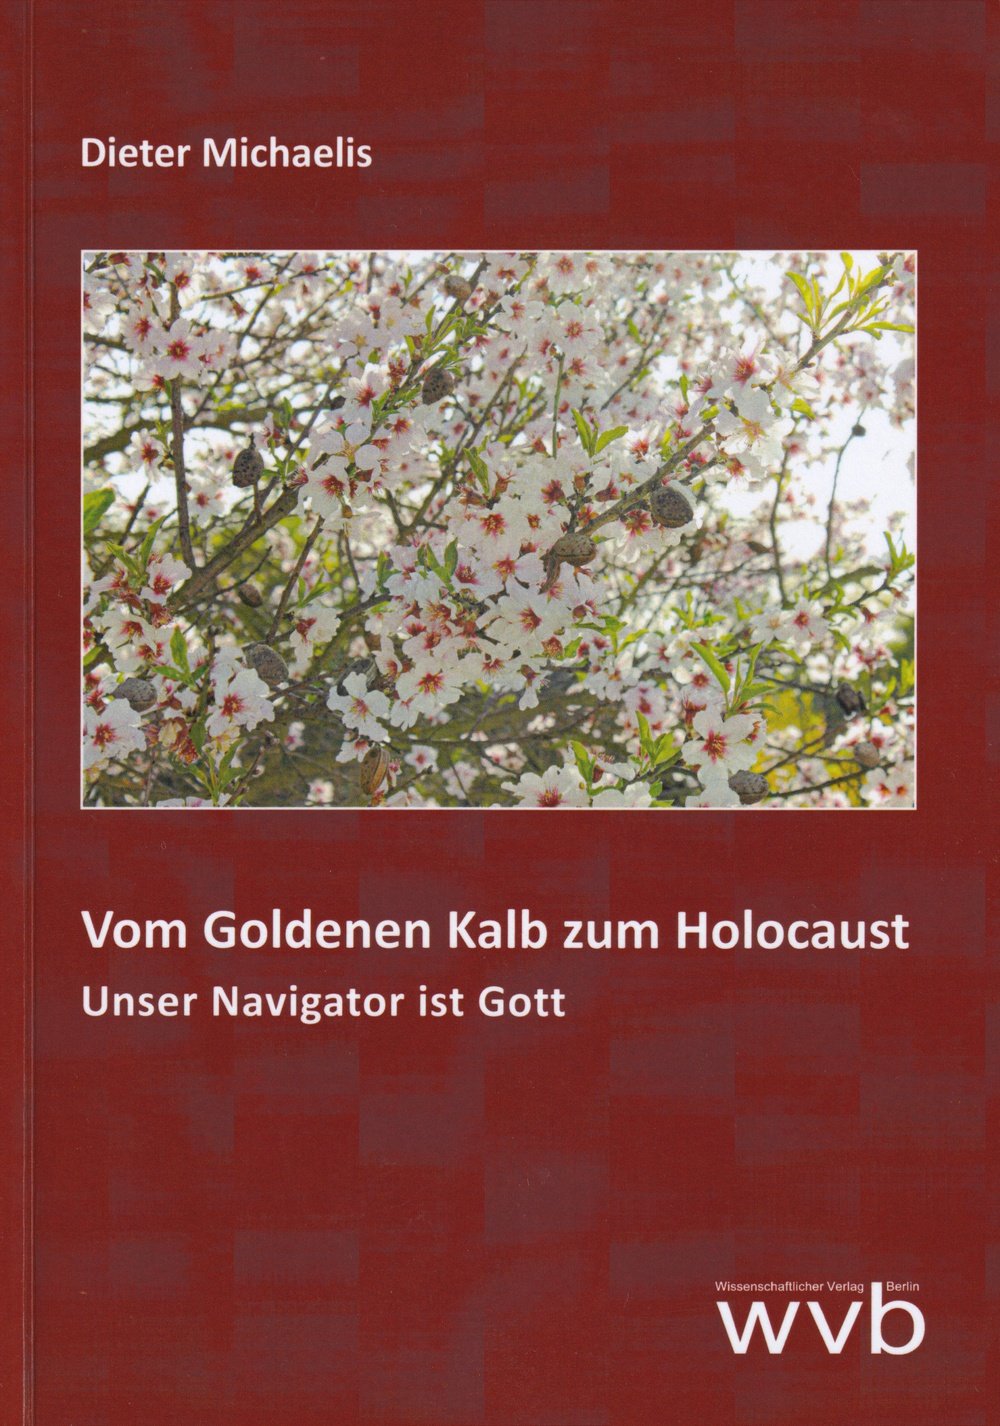 Vom Goldenen Kalb zum Holocaust (Kulturverein Guntersblum CC BY-NC-SA)